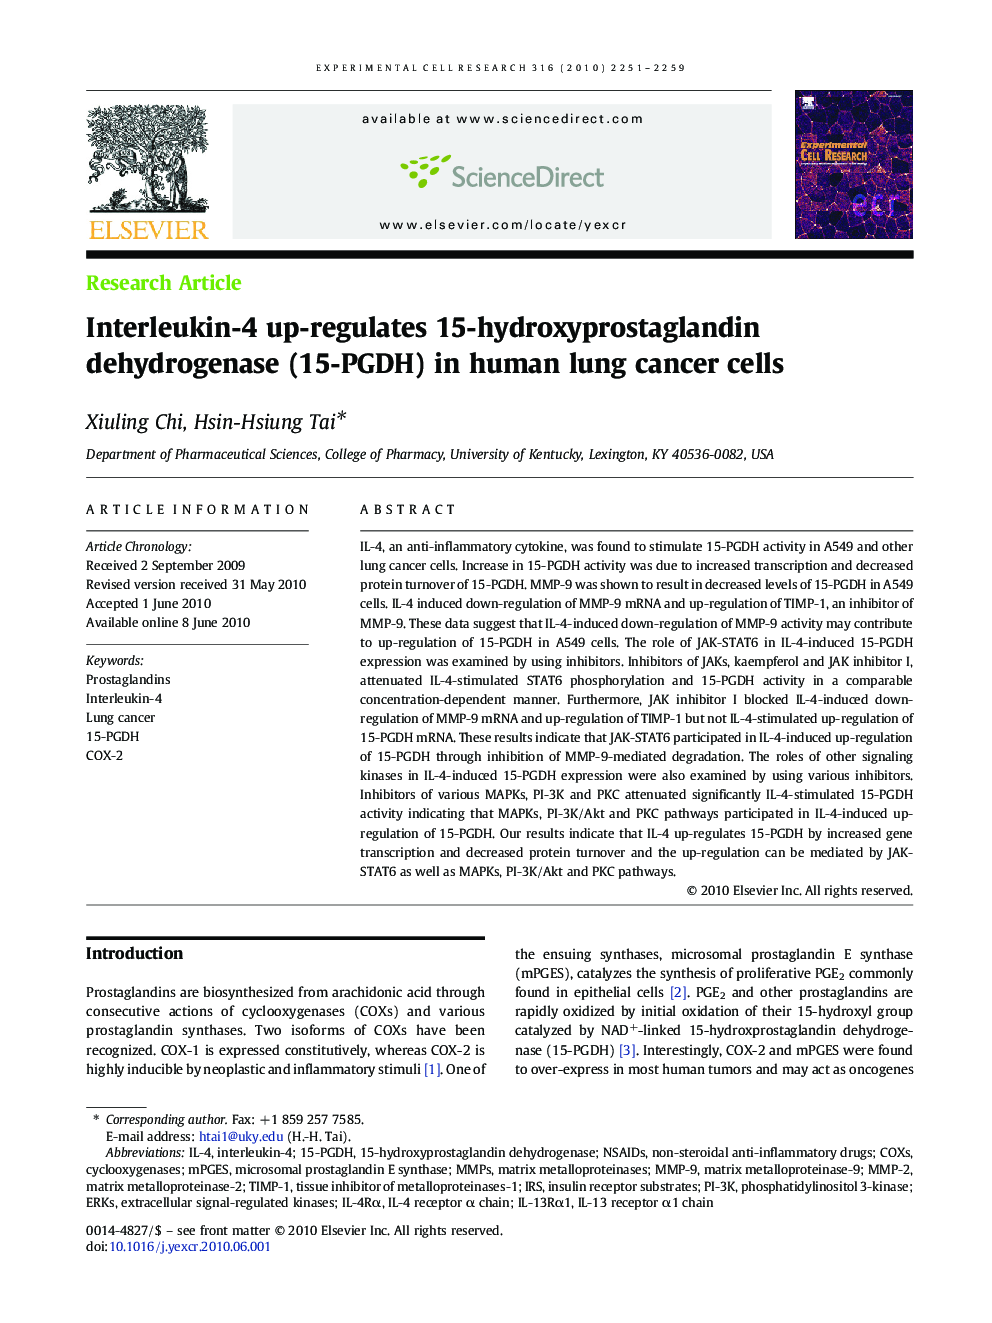 Interleukin-4 up-regulates 15-hydroxyprostaglandin dehydrogenase (15-PGDH) in human lung cancer cells